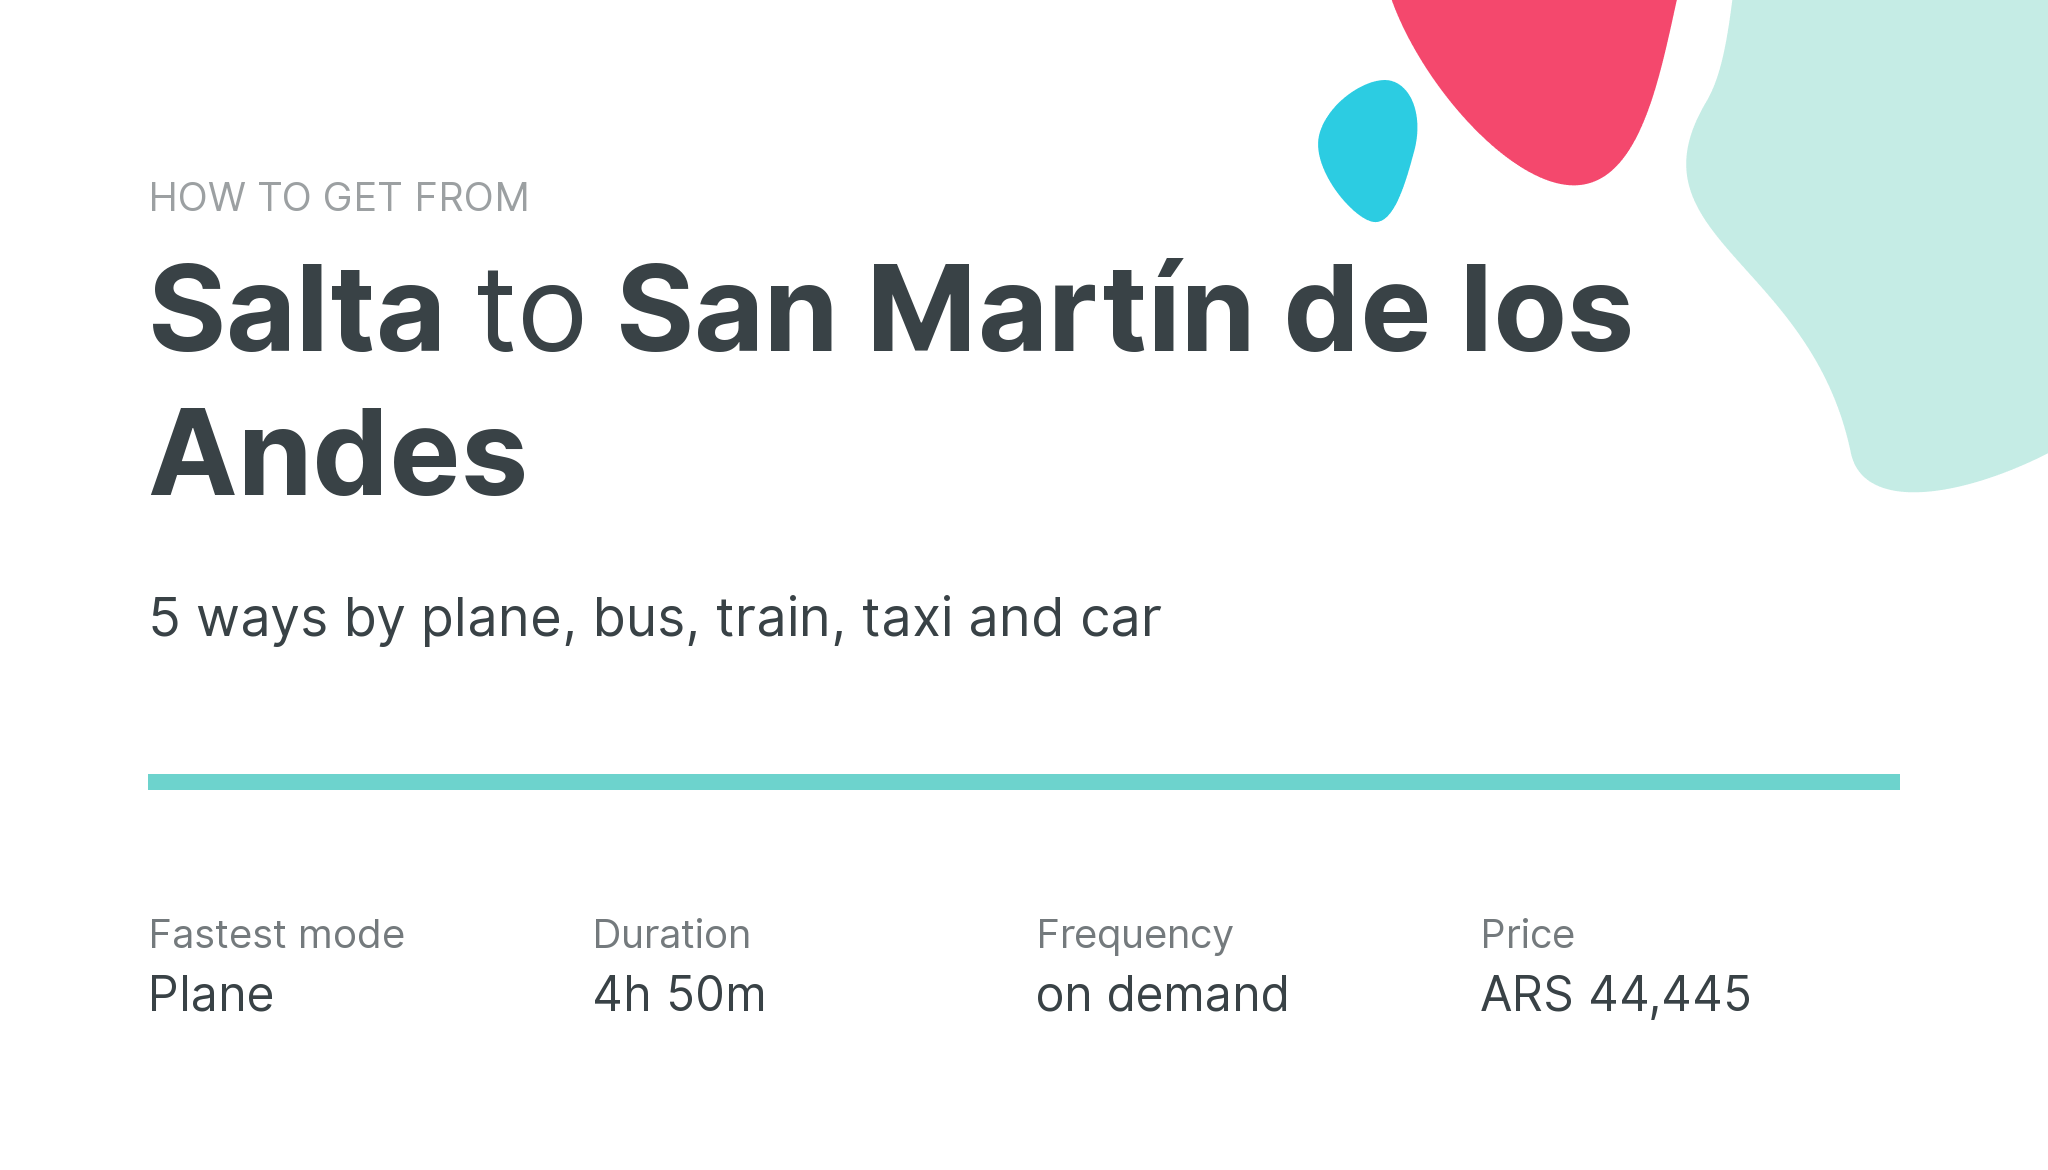 How do I get from Salta to San Martín de los Andes